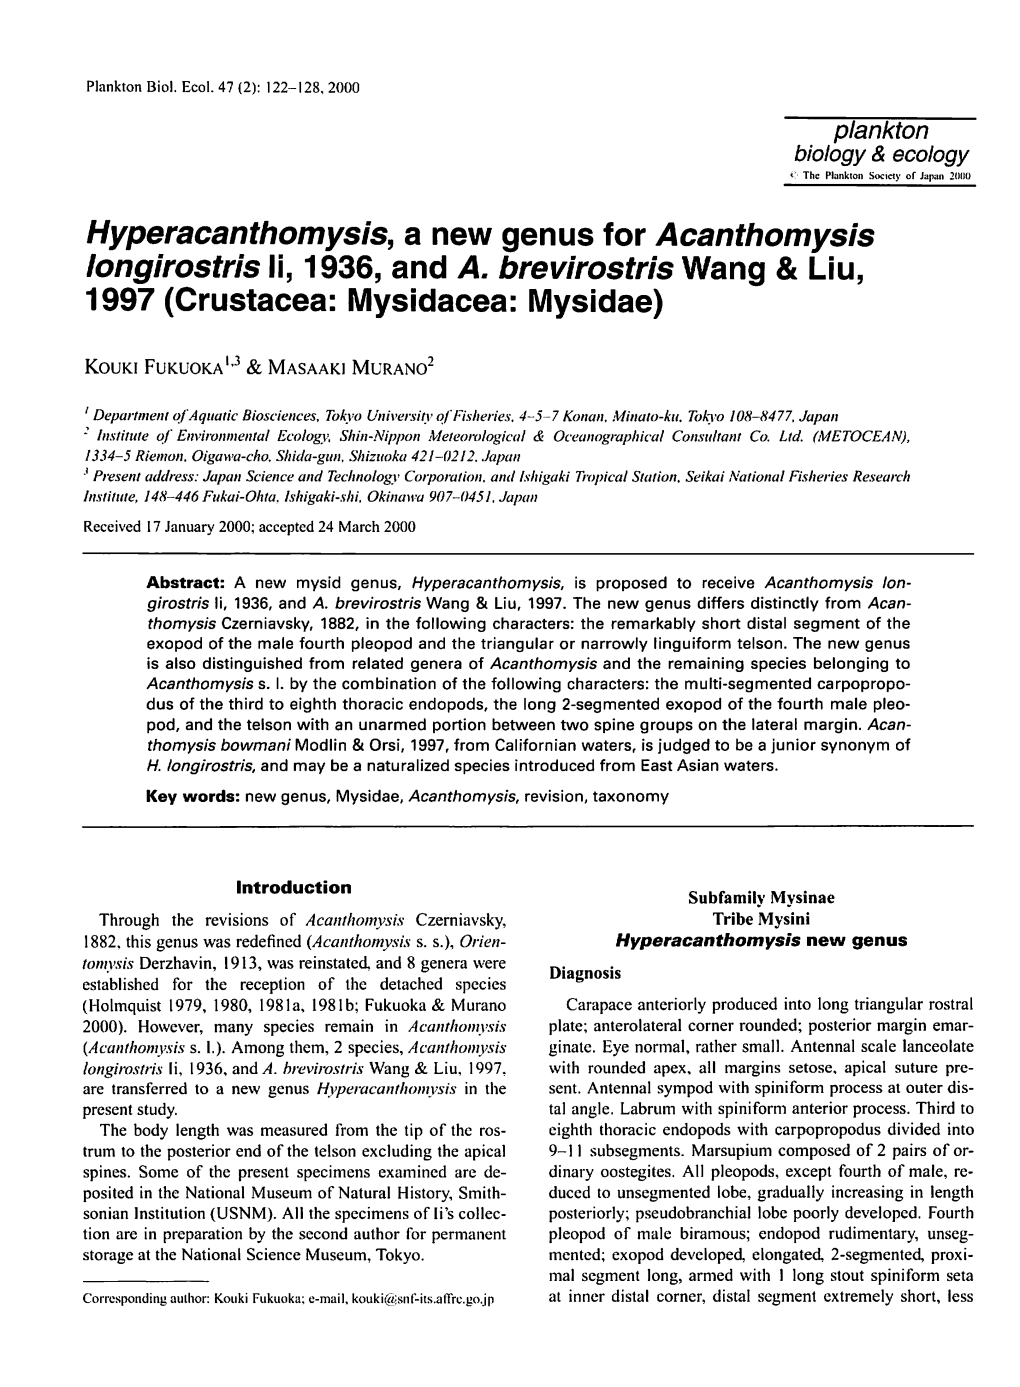 Hyperacanthomysis, a New Genus for Acanthomysis Longirostris Li, 1936, and a Brevirostris Wang & Liu, 1997 (Crustacea: Mysidacea: Mysidae)